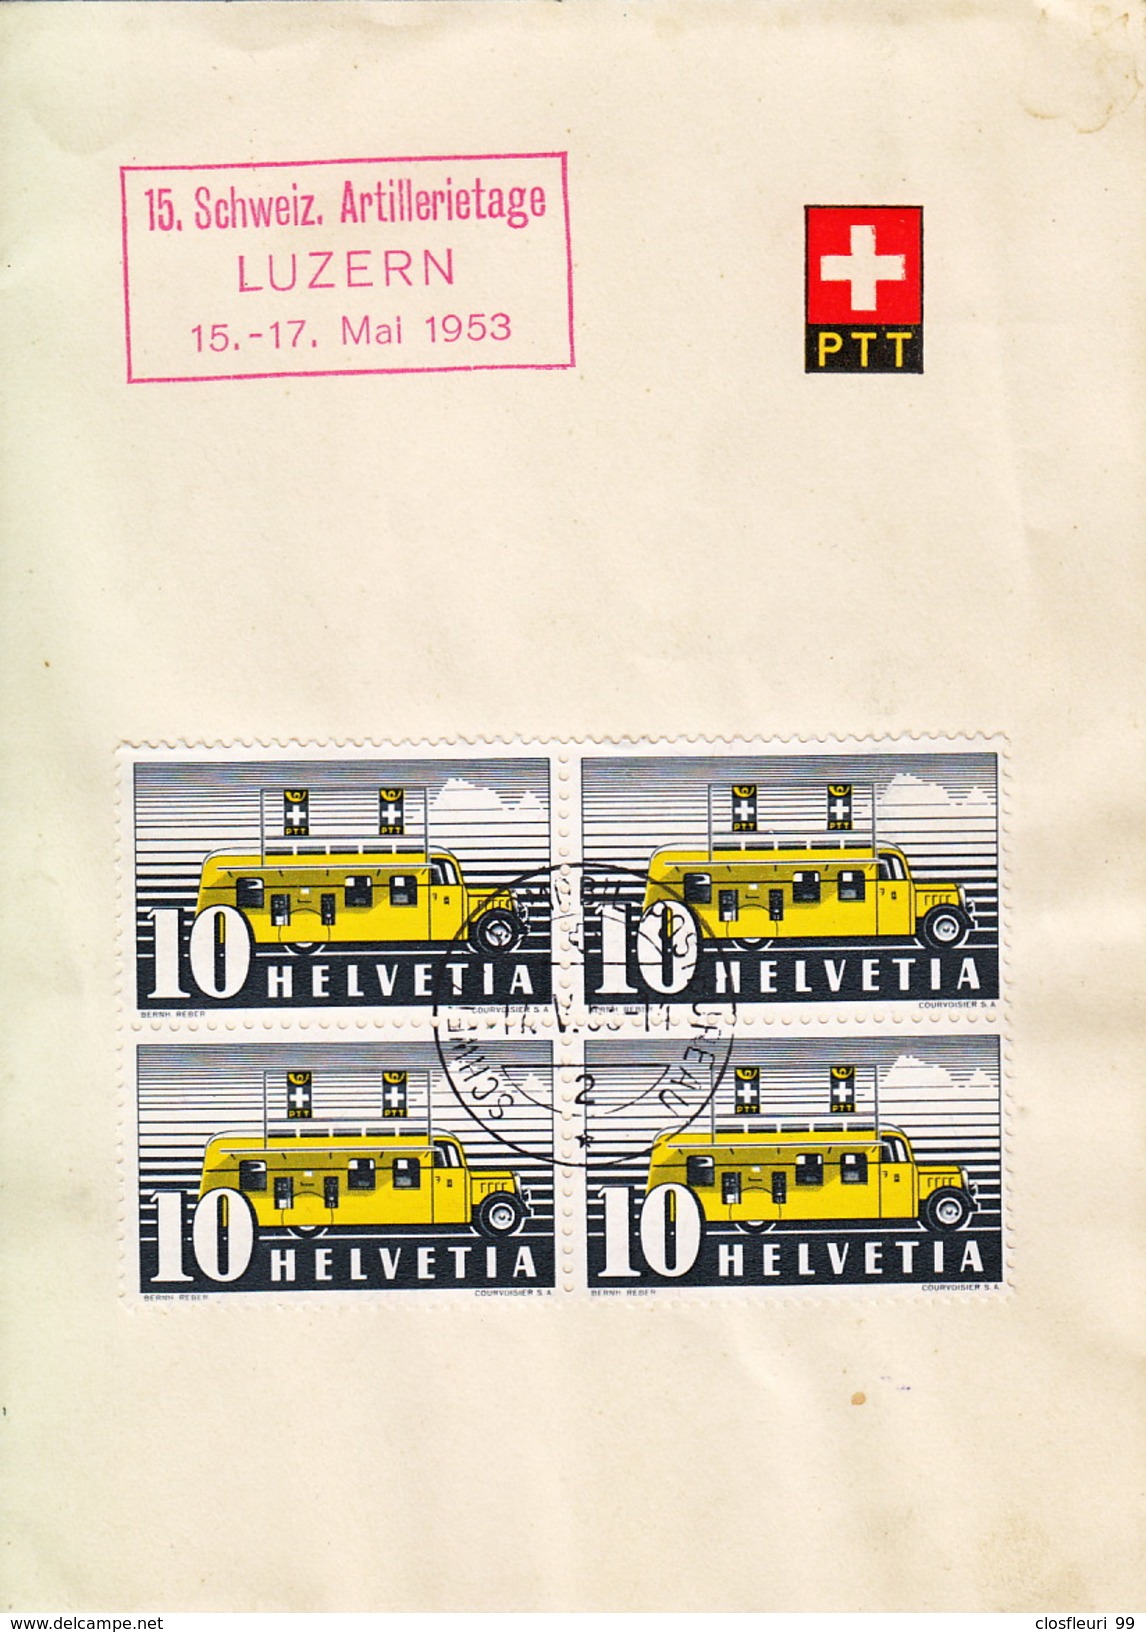 15.Schweizerischen  Artillerietage Luzern 15-17 Mai 1953 / Postautomobil 2 / Zumst.  4ter Block 276 - Covers & Documents